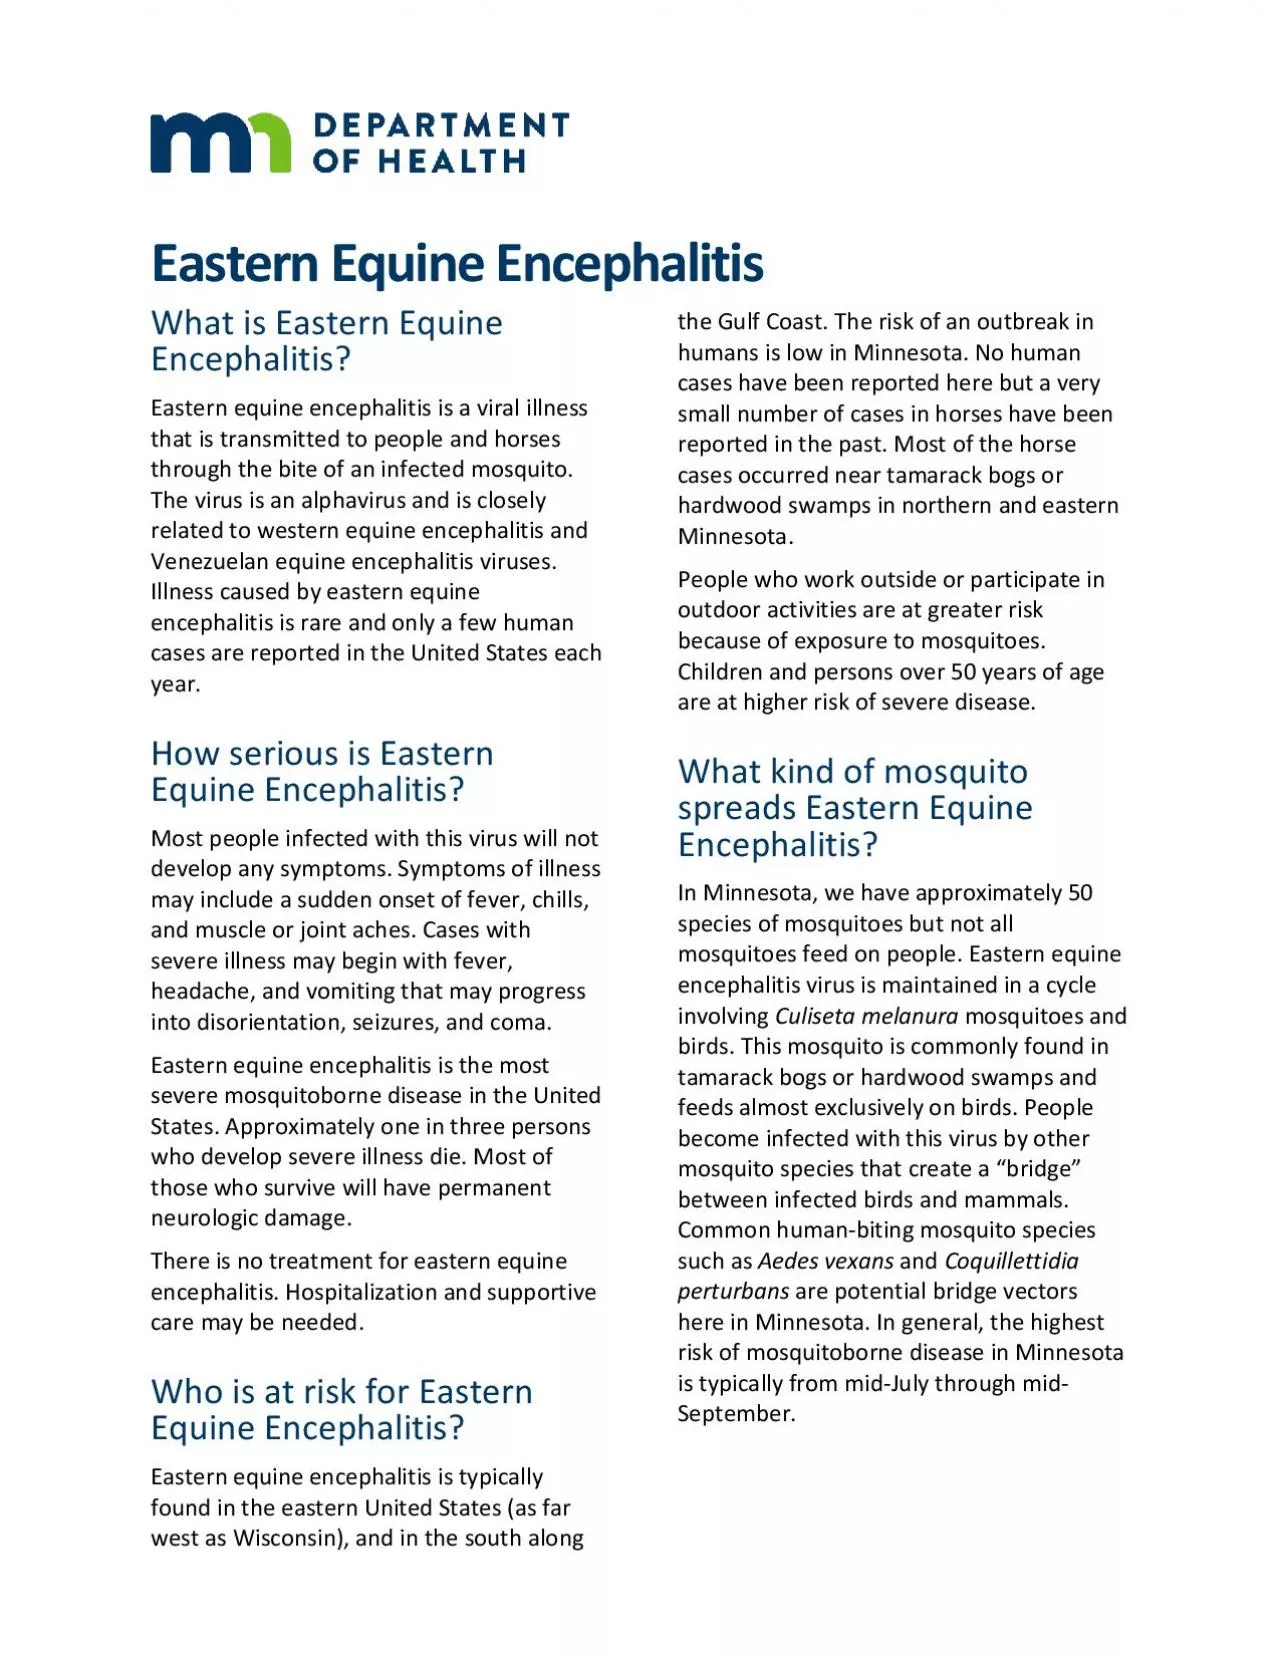 stern Equine EncephalitisWhat is Eastern Equine EncephalitisEasternequ